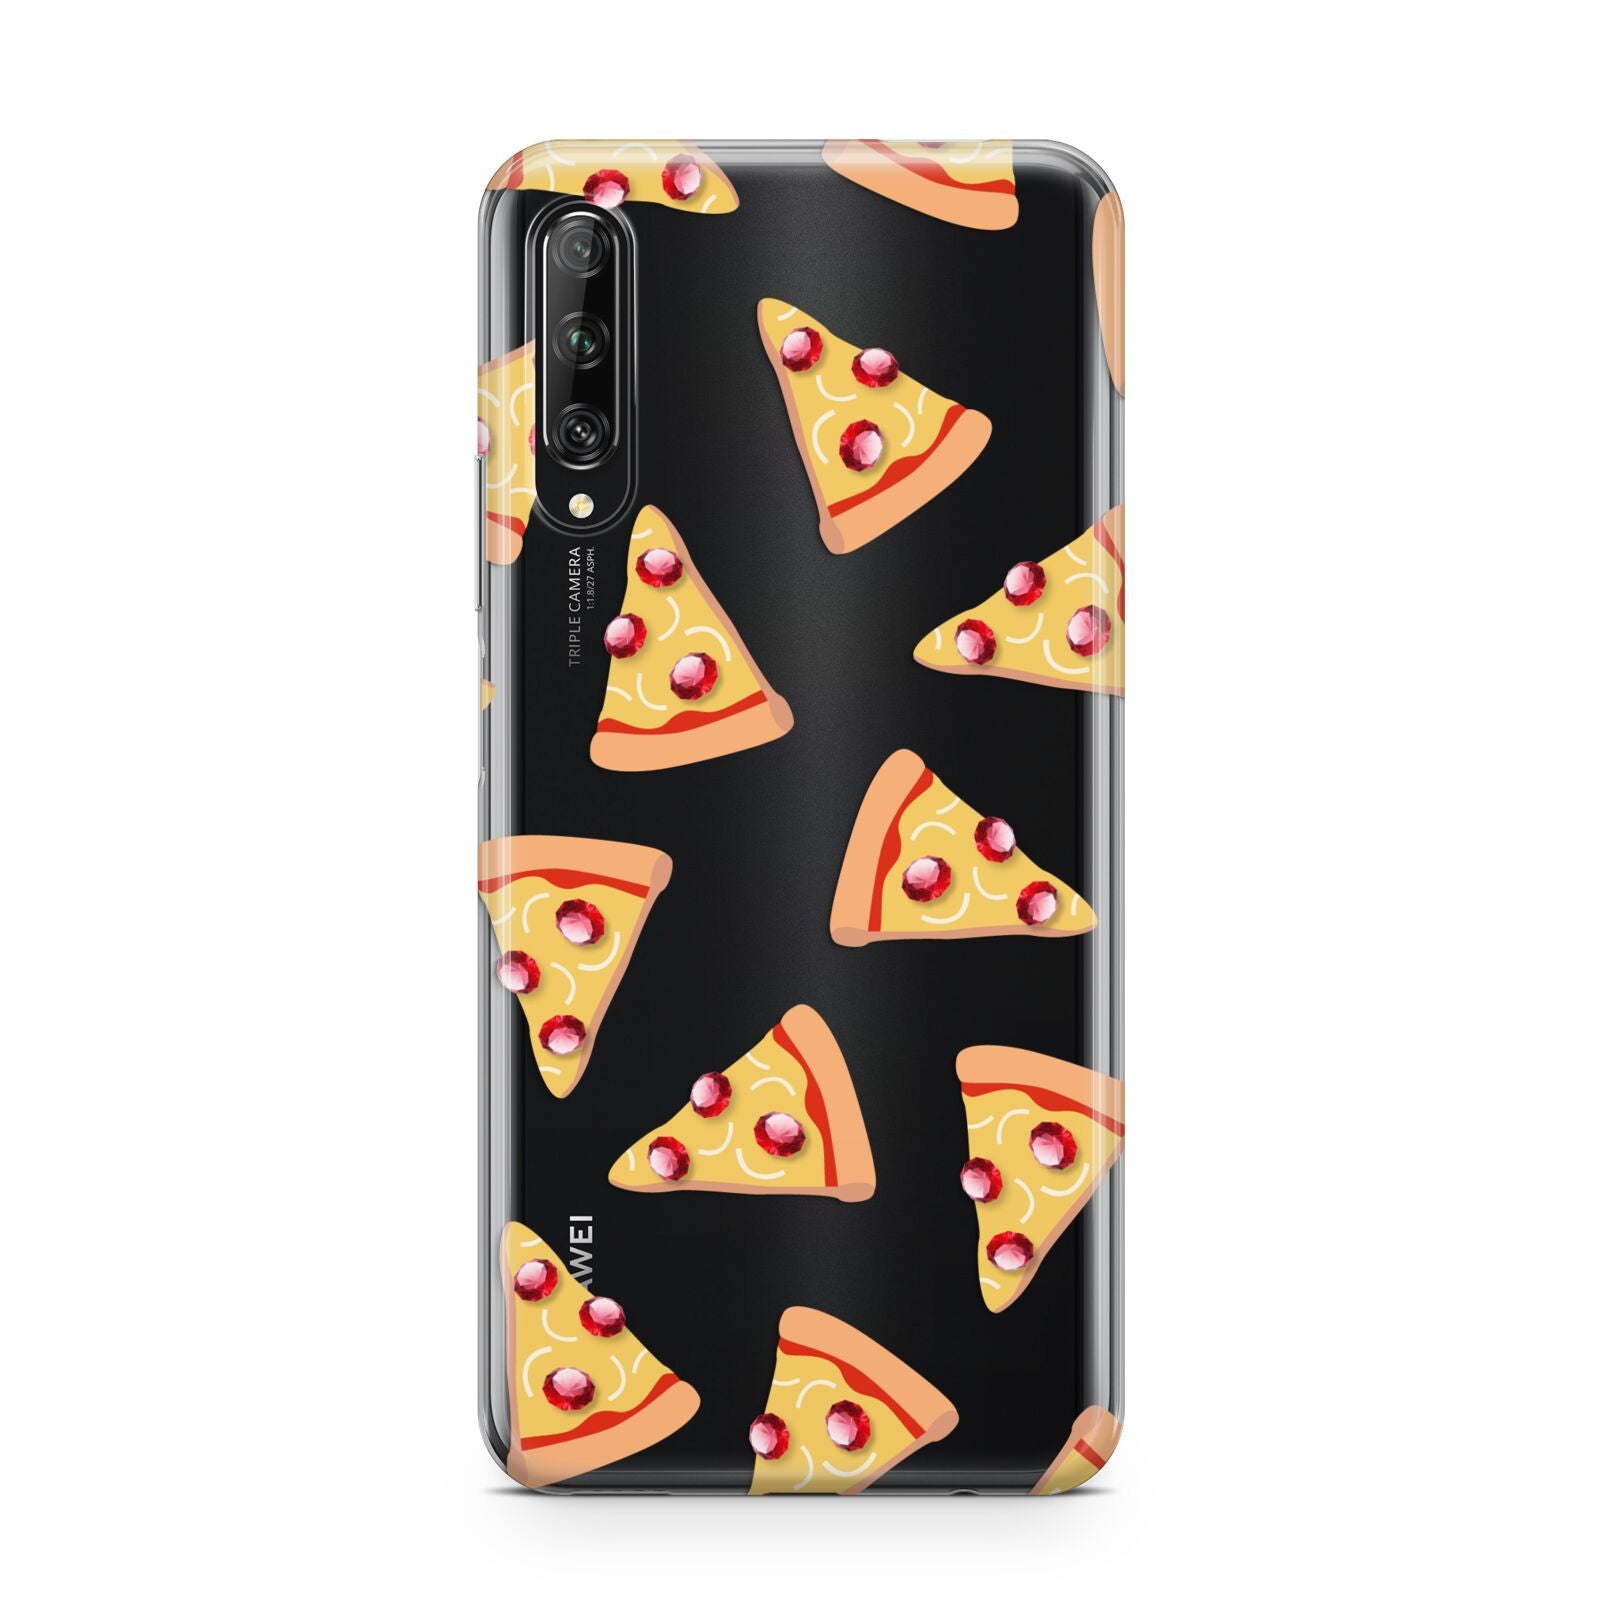 Rubies on Cartoon Pizza Slices Huawei P Smart Pro 2019